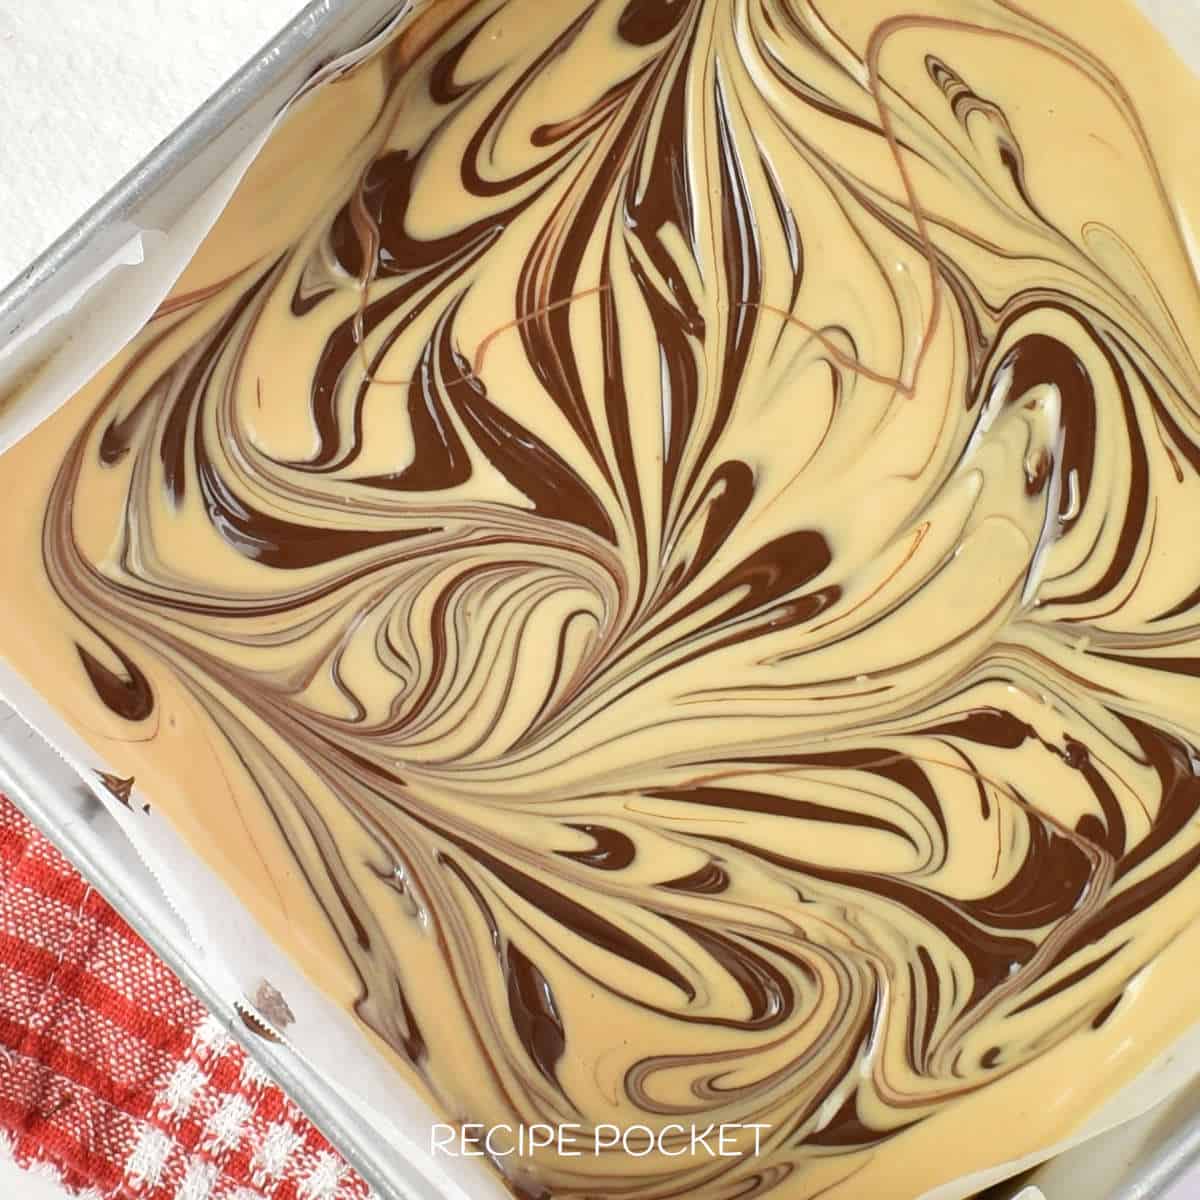 Dark chocolate swirls in a white chocolate and peanut butter mixture.